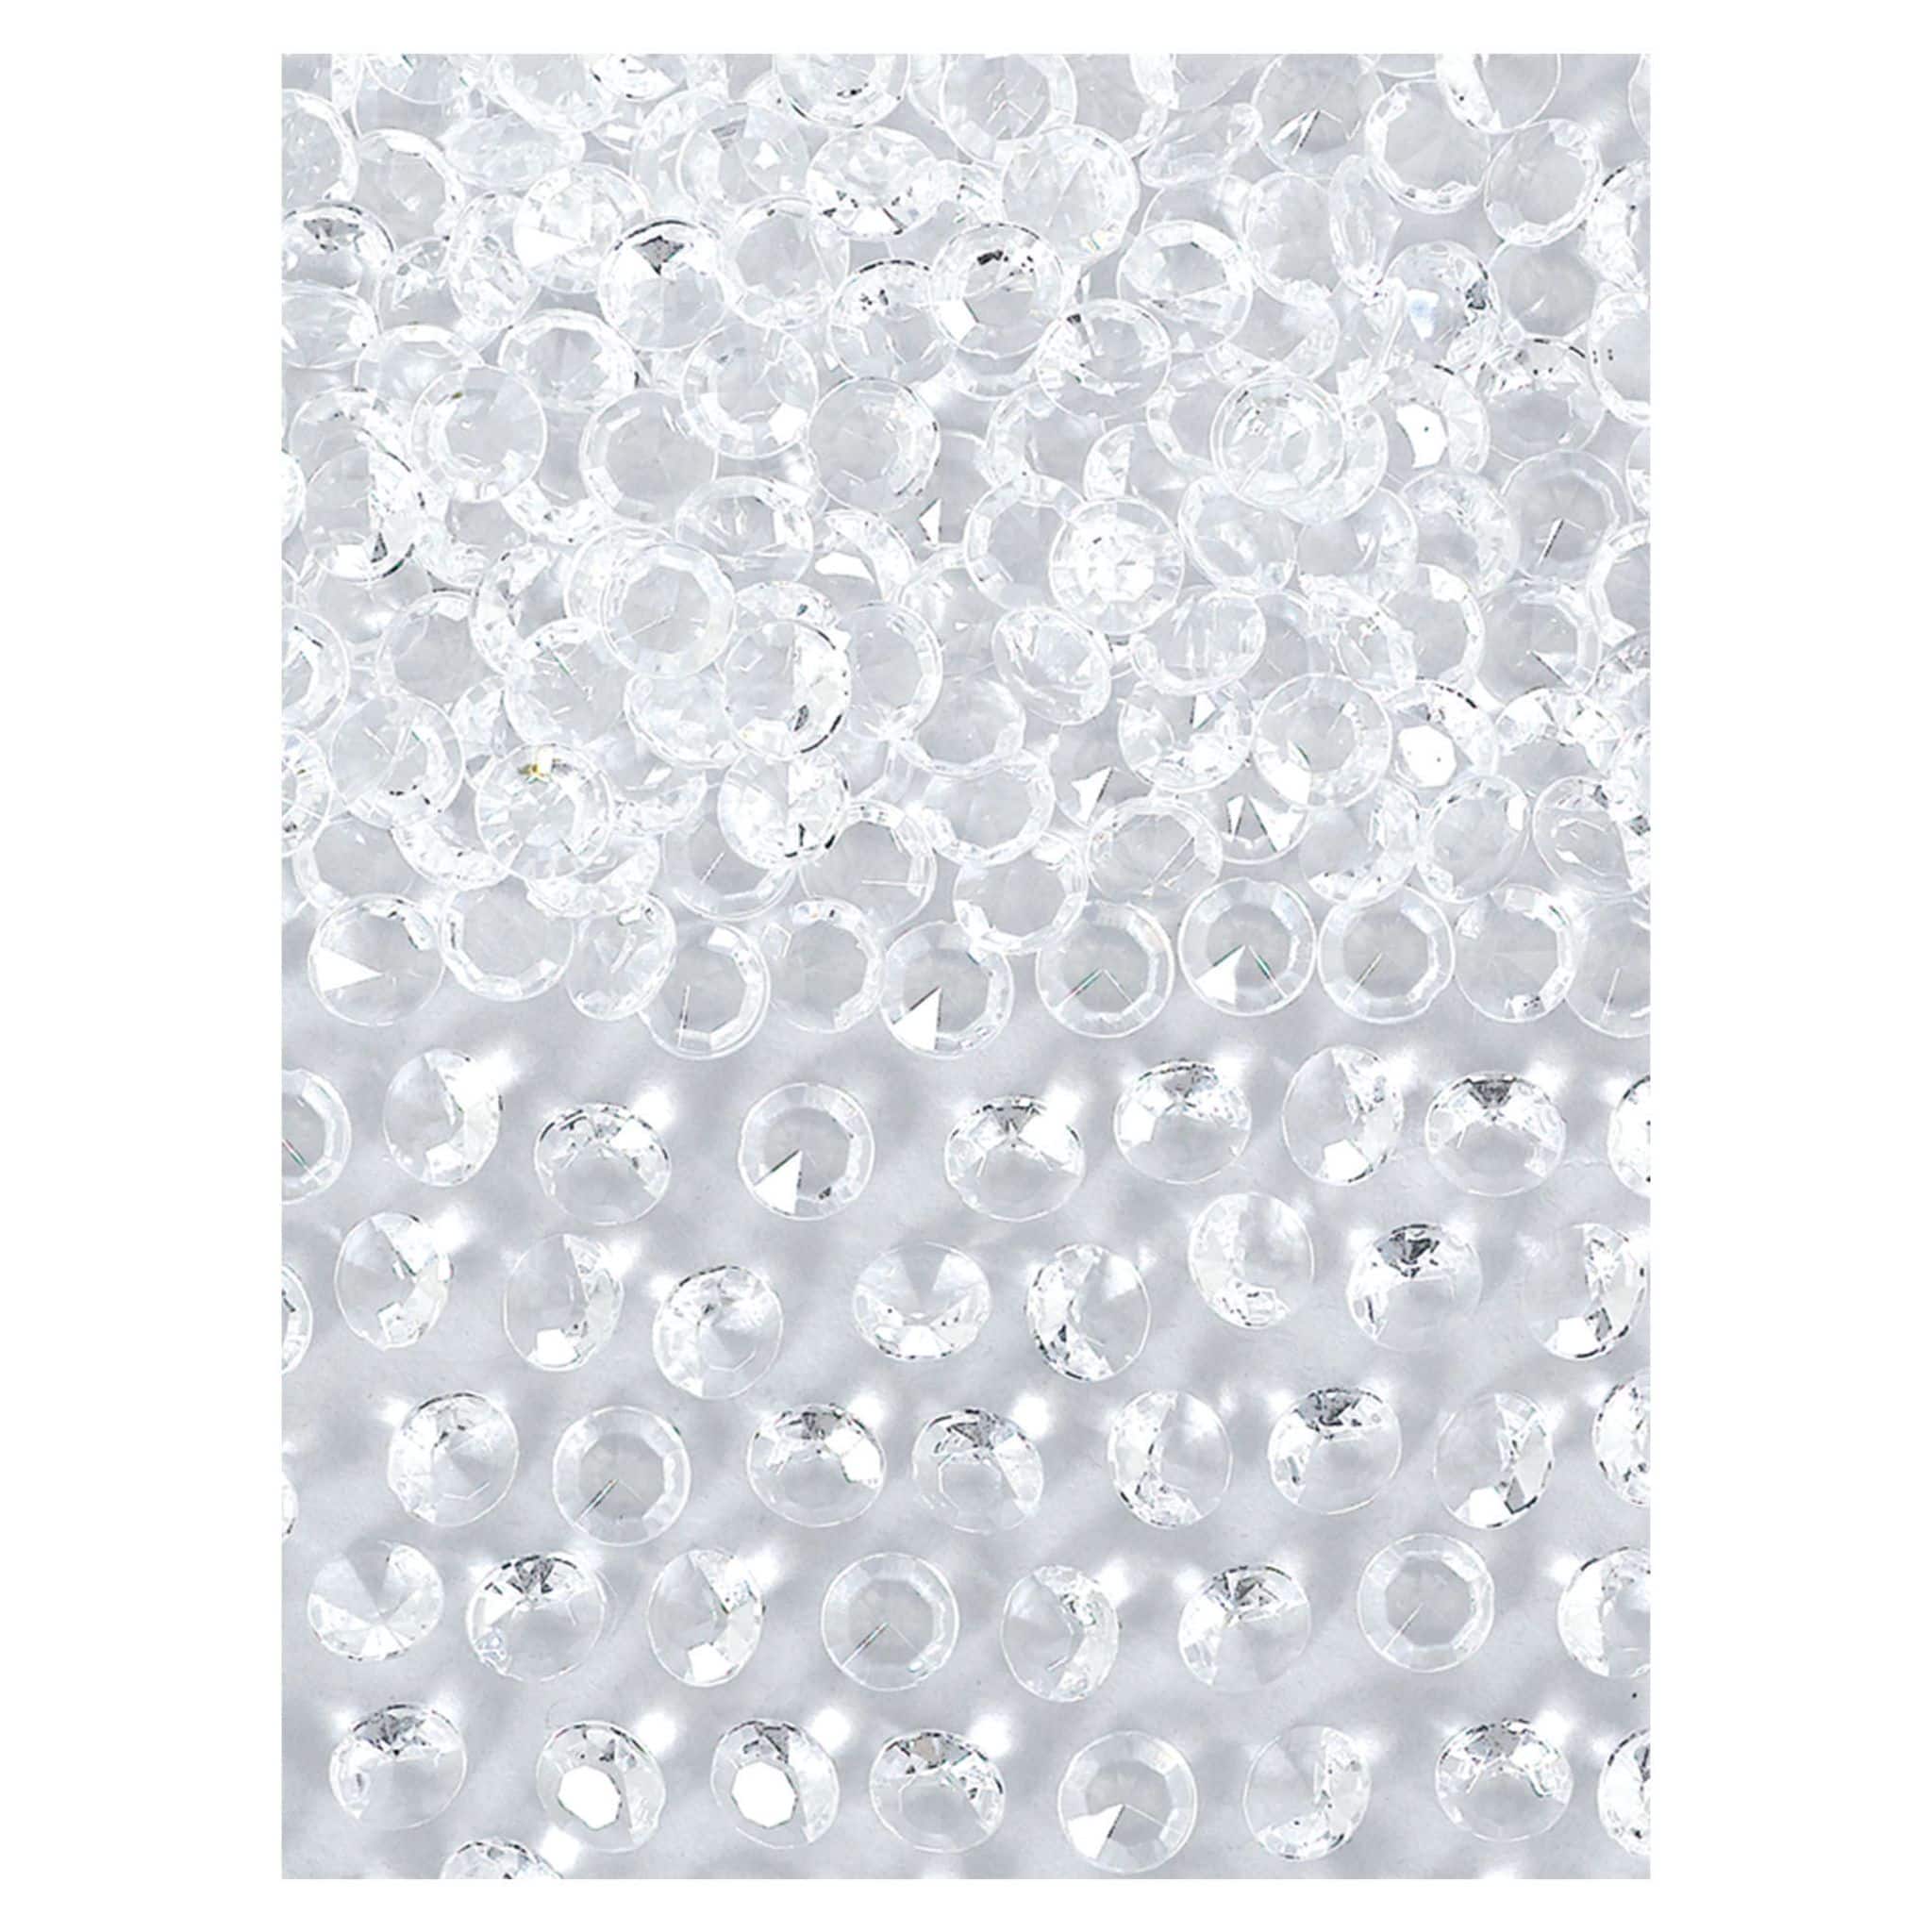 5 Pack Silver Clear Confetti Gems